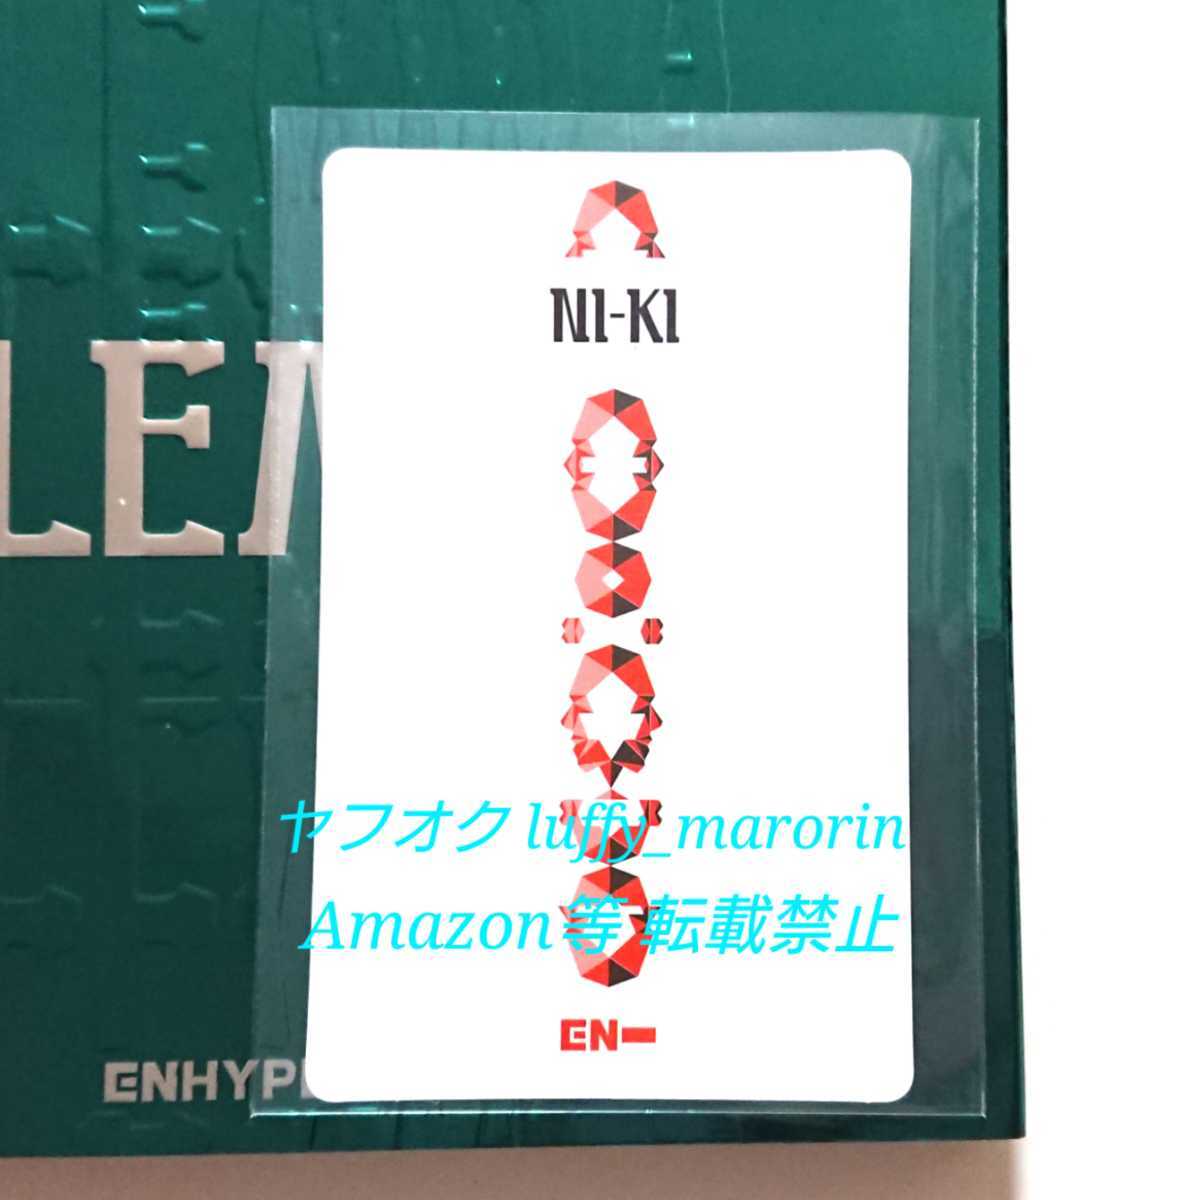 ENHYPEN フルアルバム DIMENSION DILEMMA Essential ver. エンハイプン エナイプン トレカ CD フォトカード ニキ NI-KI